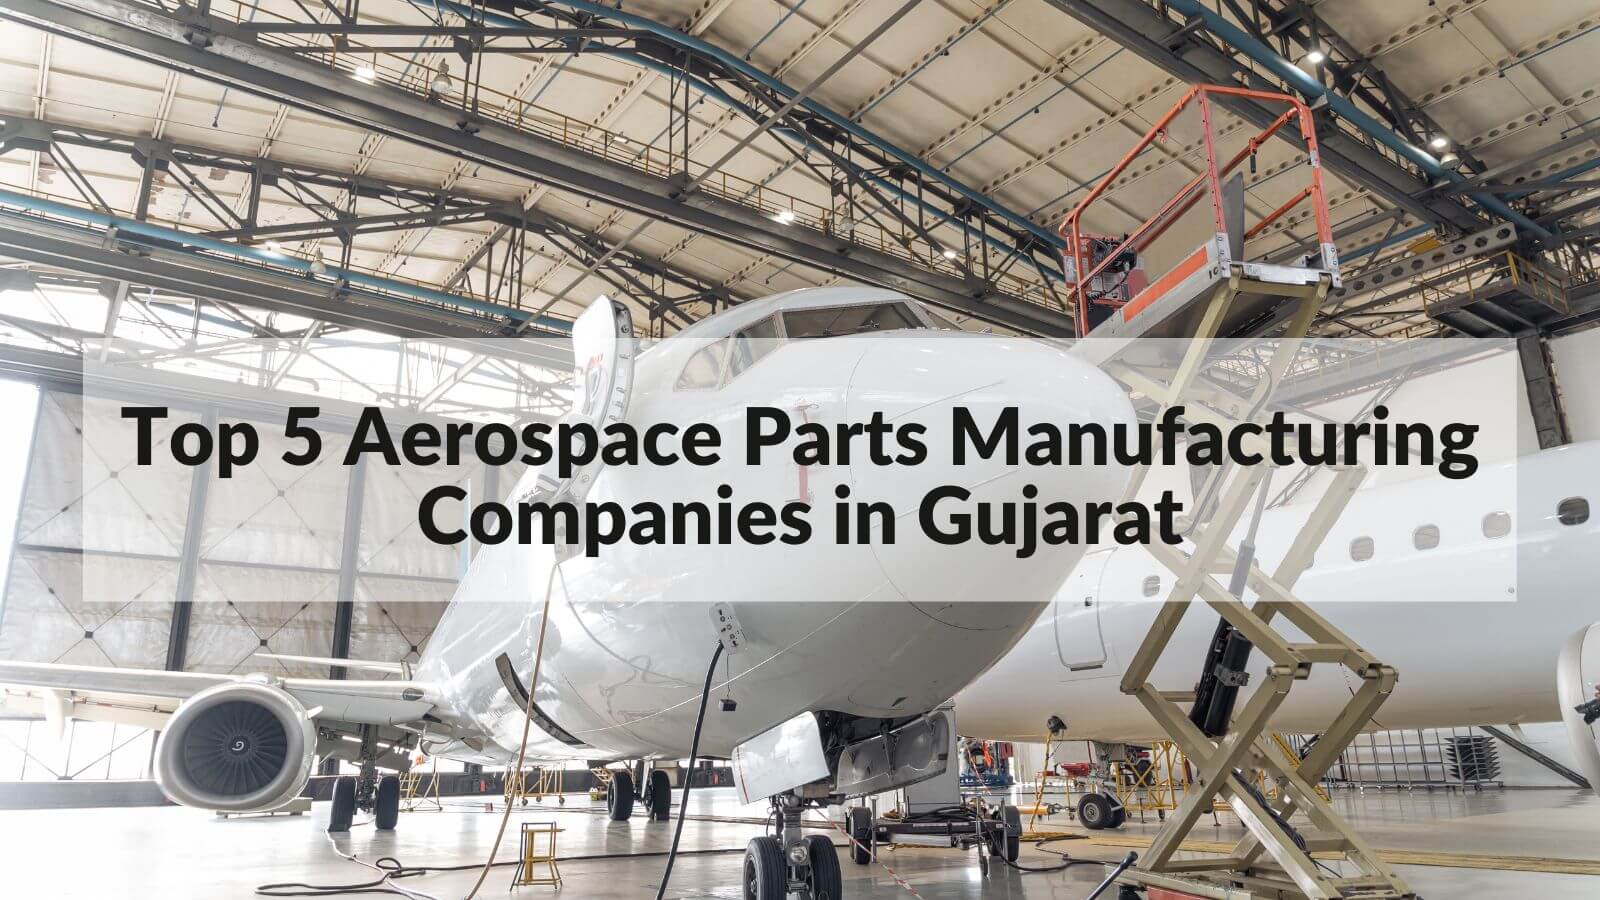 Top 5 Aerospace Parts Manufacturing Companies in Gujarat